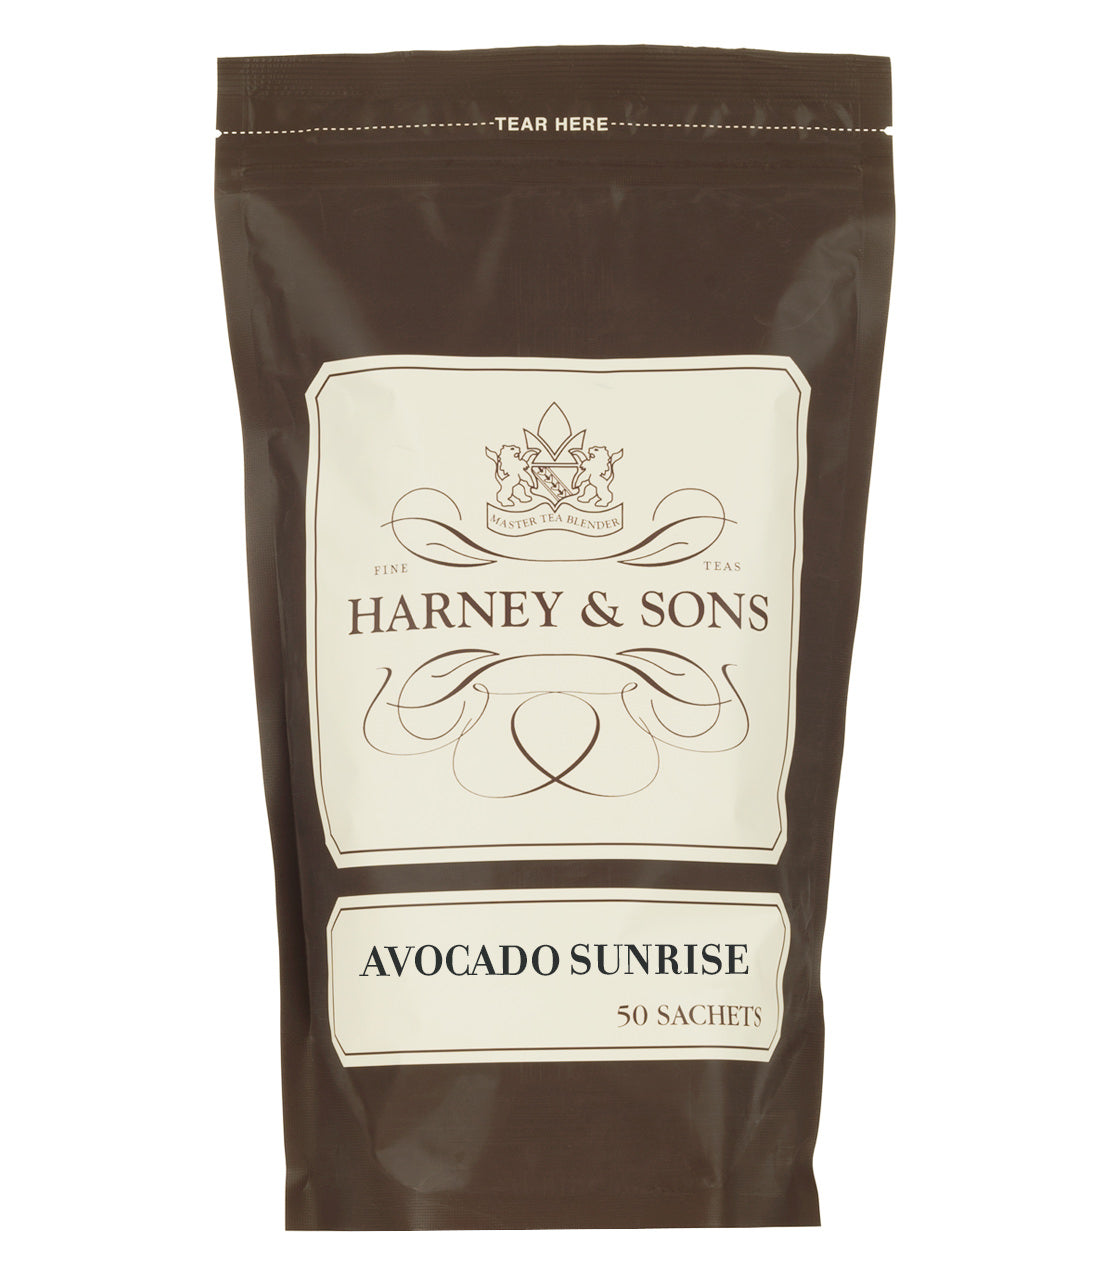 Avocado Sunrise - Sachets Bag of 50 Sachets - Harney & Sons Fine Teas